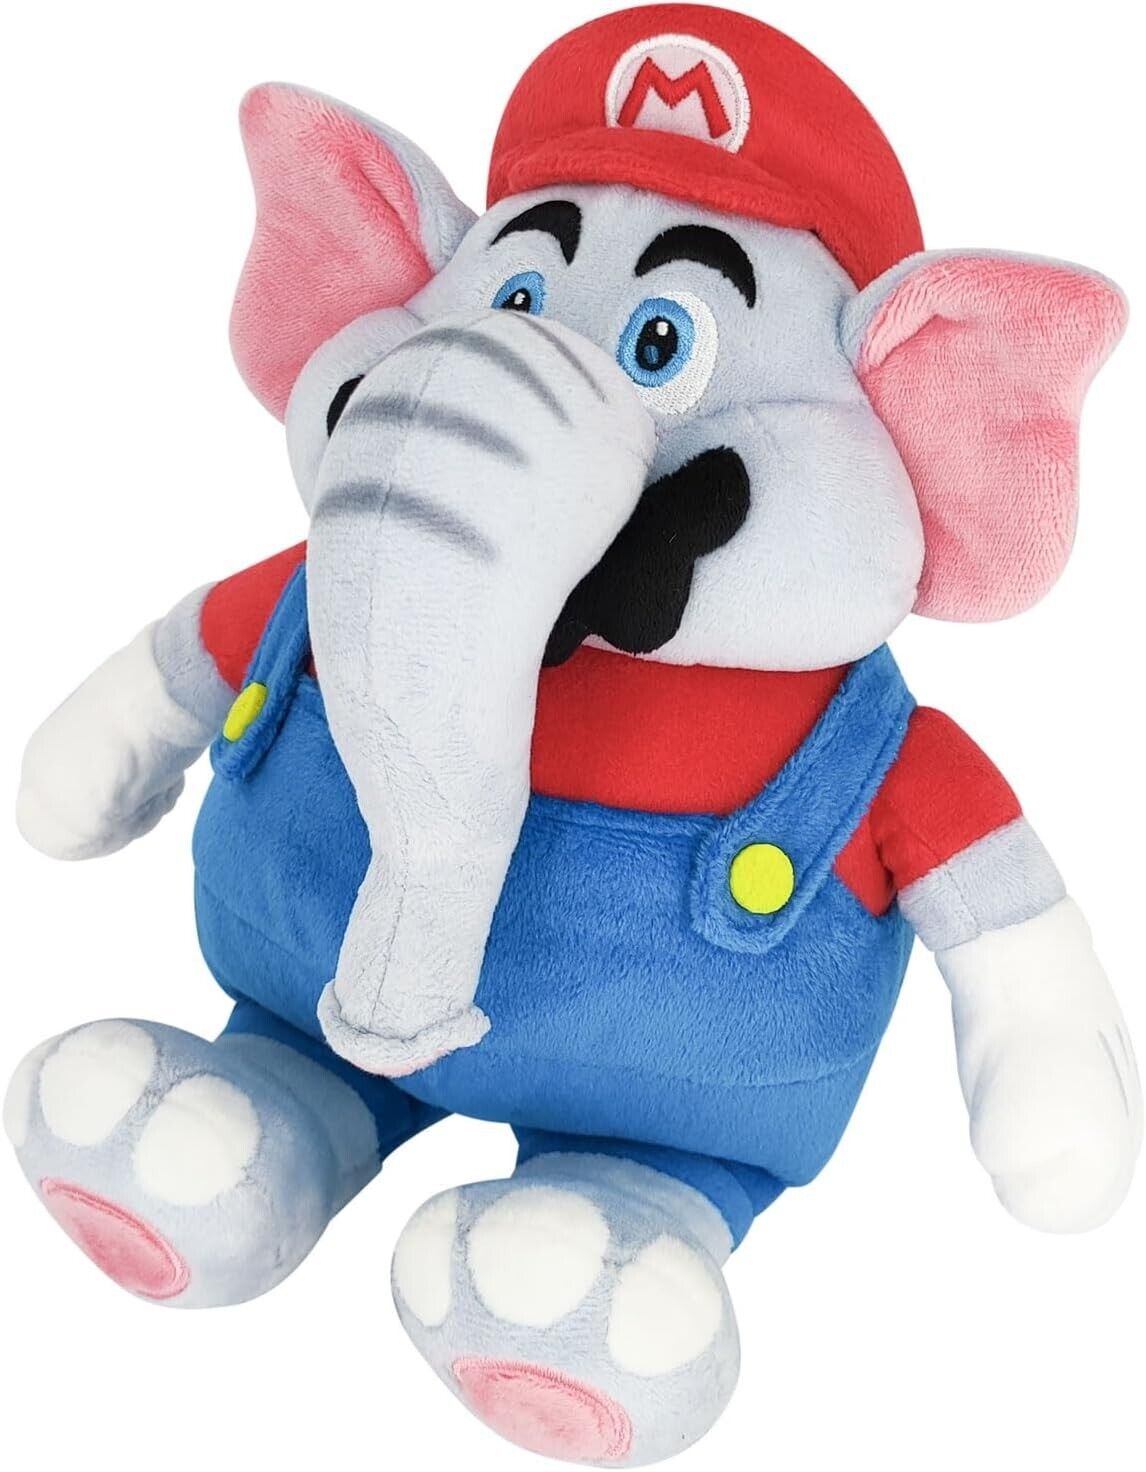 Sanei Trading Super Mario Bros. Wonder Elephant Mario (S) W15×D14×H26cm Plush